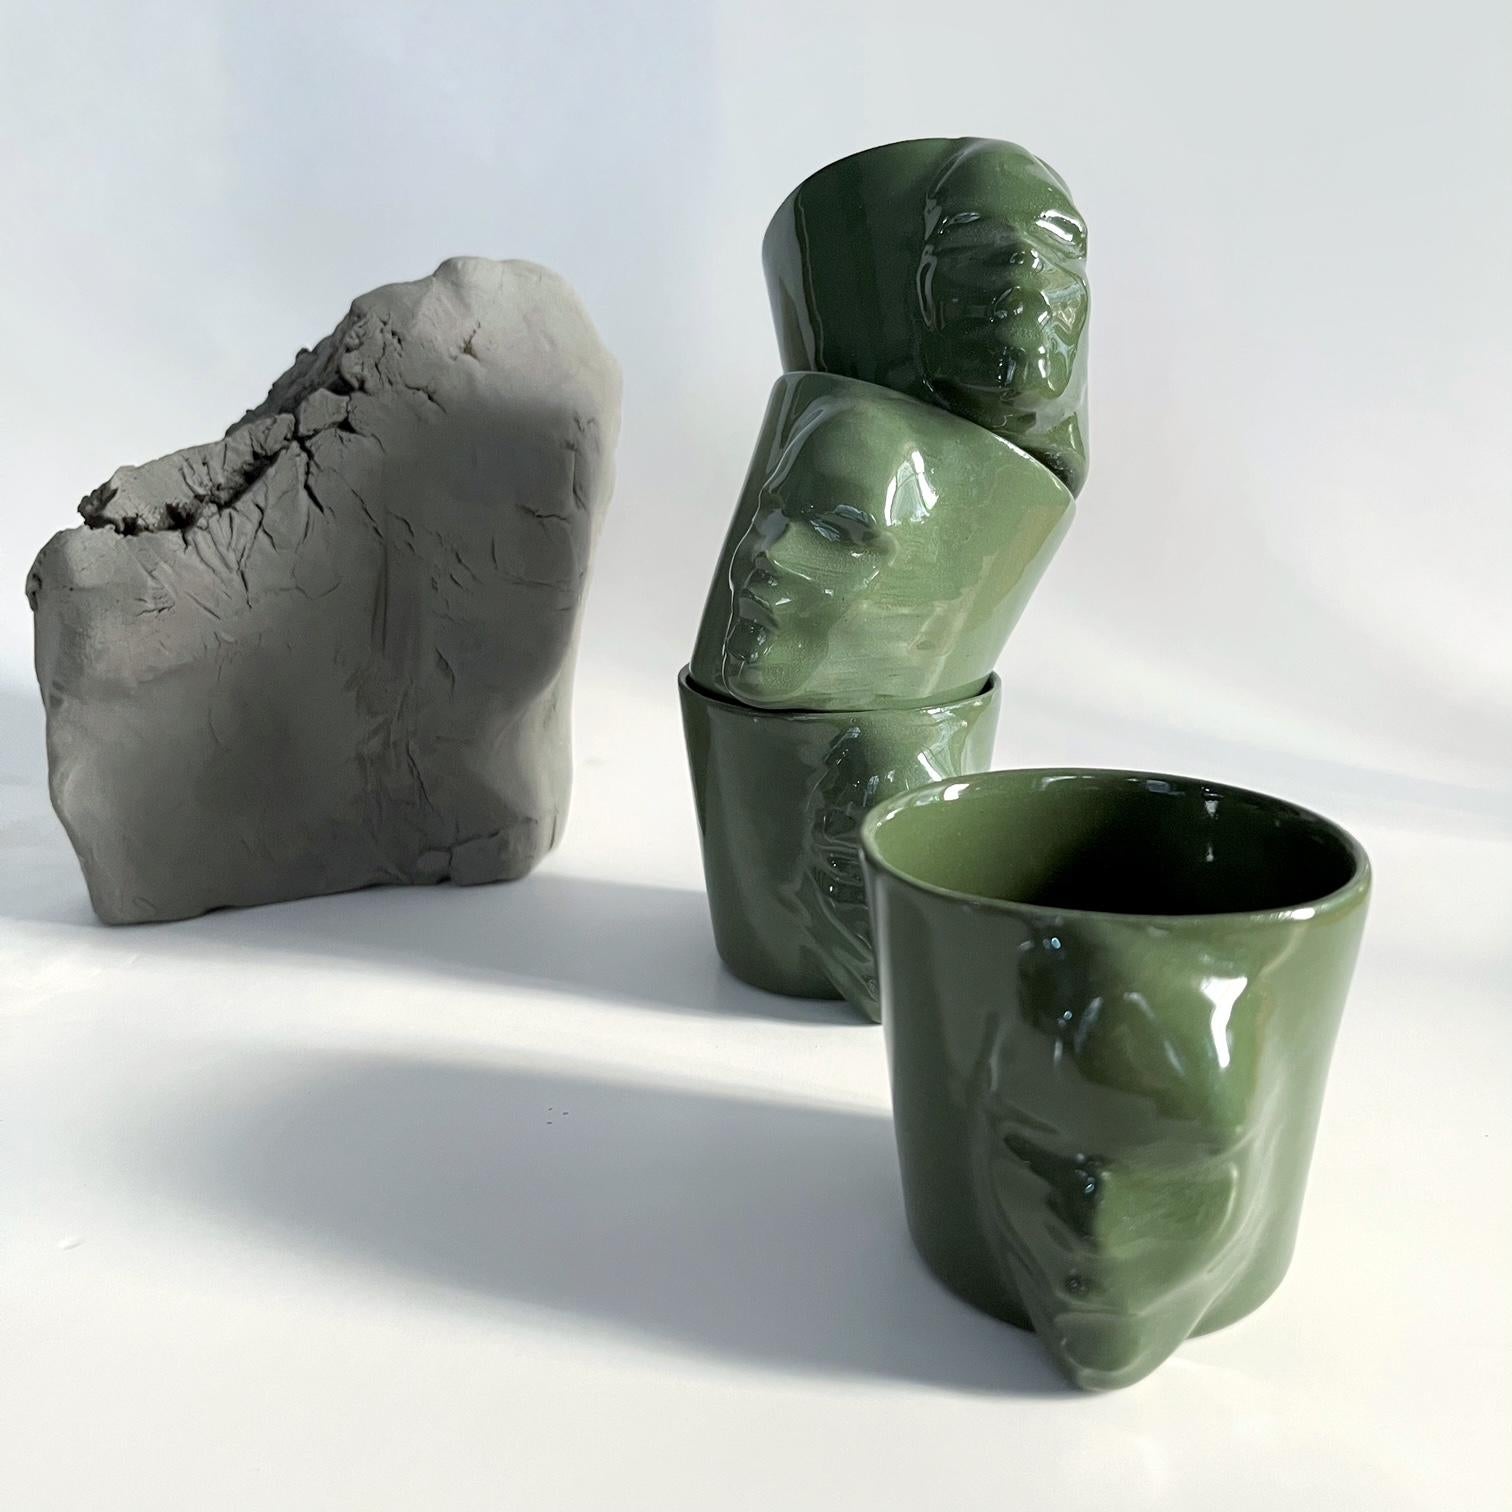 A set of 4 sculptural porcelain cups handmade by the ceramic artist Hulya Sozer. 
Food safe glaze.
Dishwasher safe.

Height: 6cm / Depth: 8cm / Diameter: 6cm
Volume: 100ml
Set includes 4 porcelain cups of 100ml

* Colors may slightly vary due to